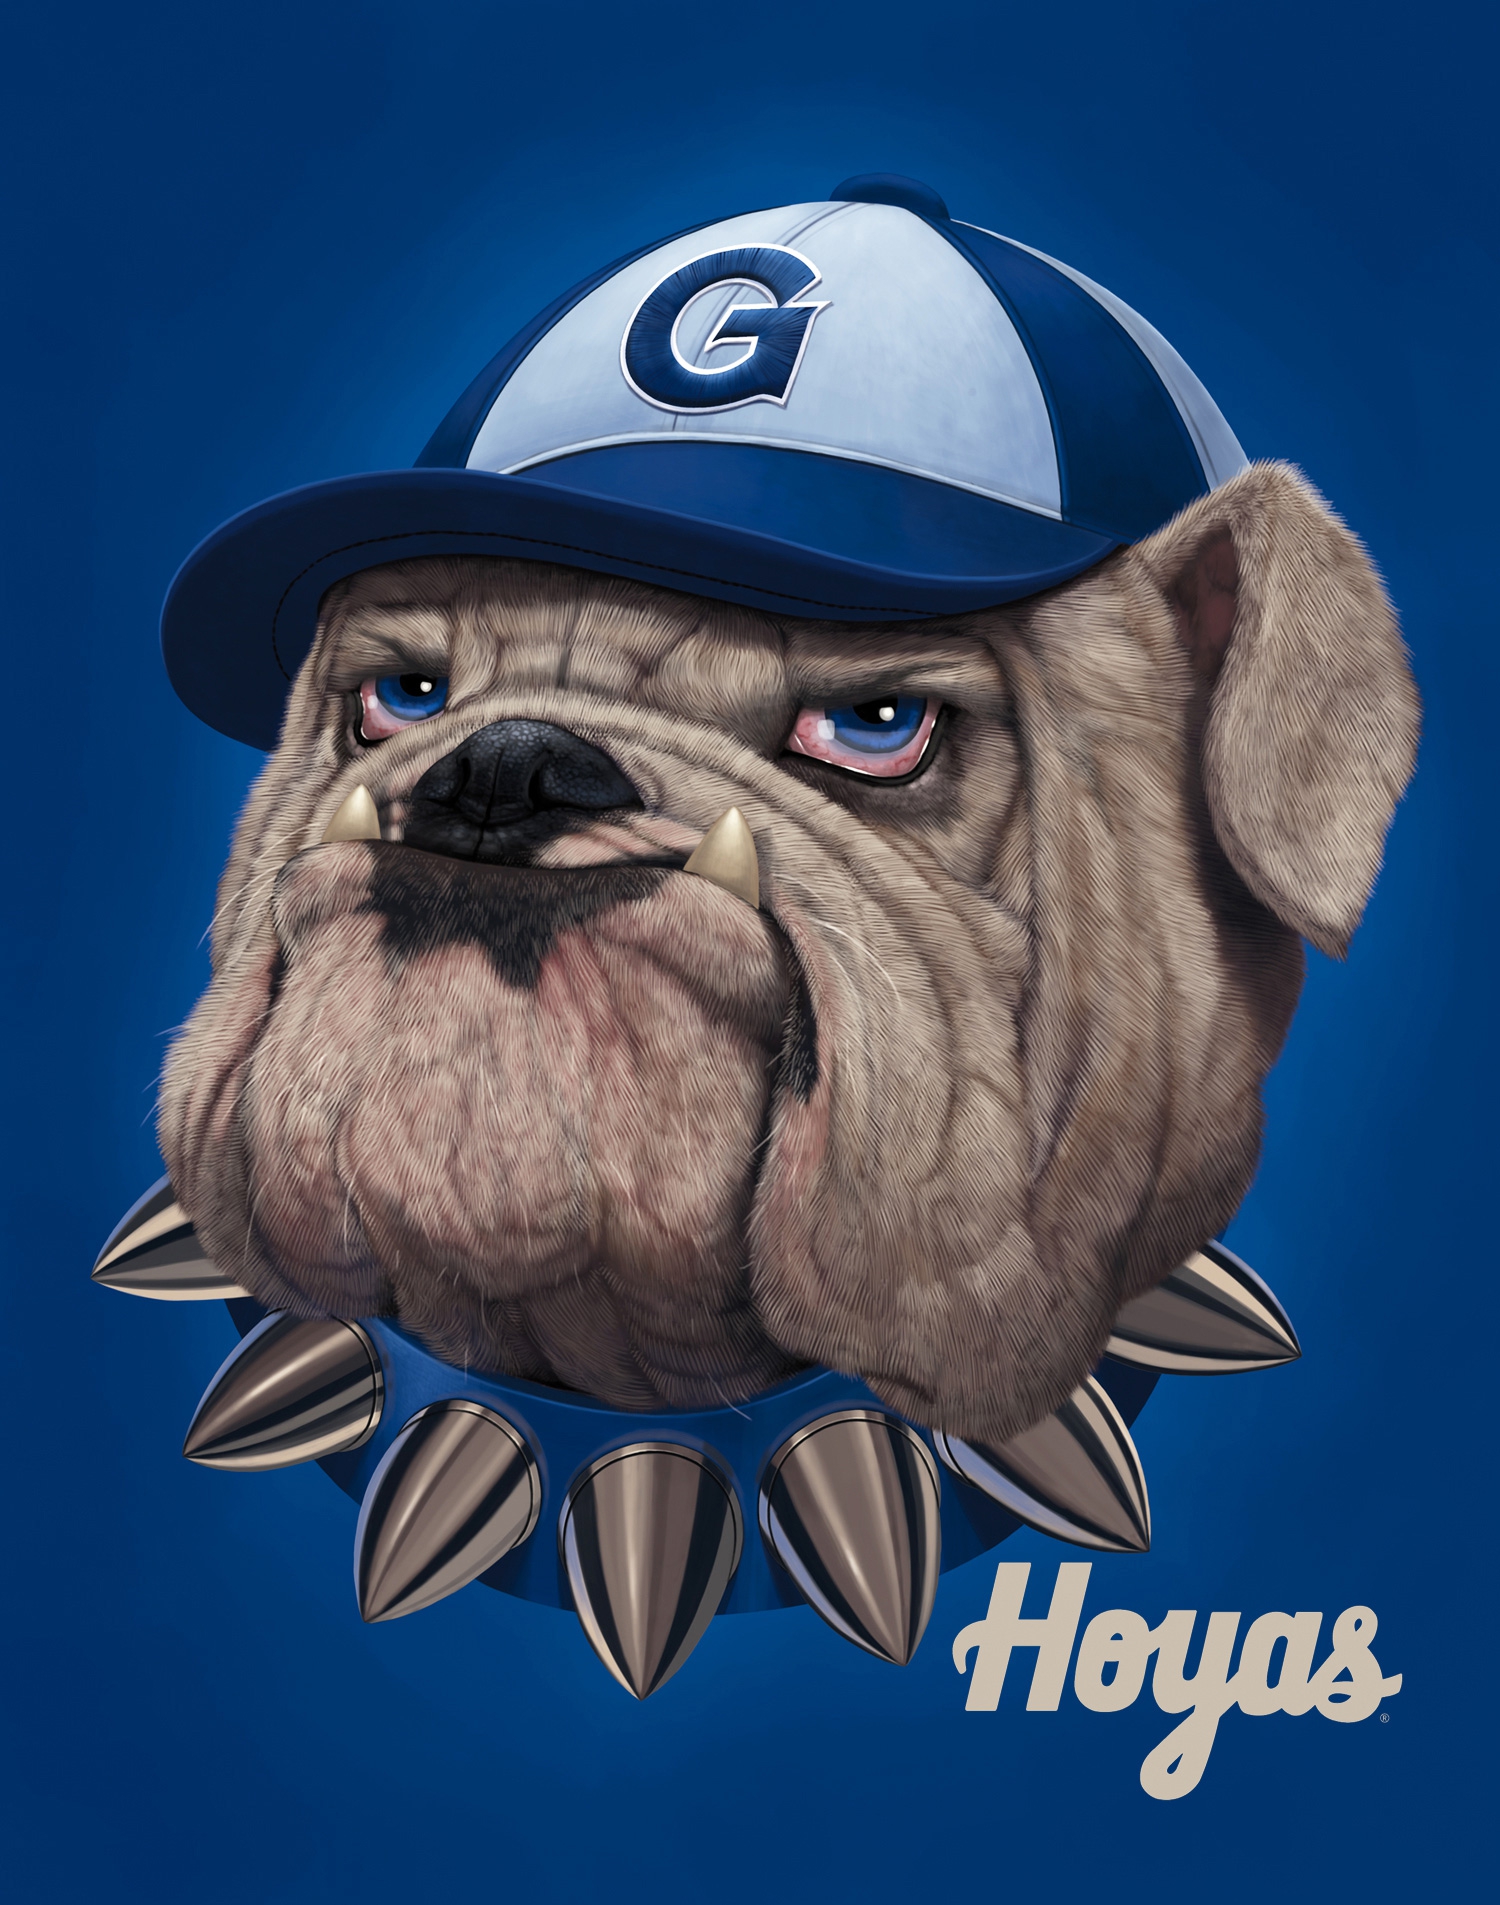 Georgetown University Bulldog